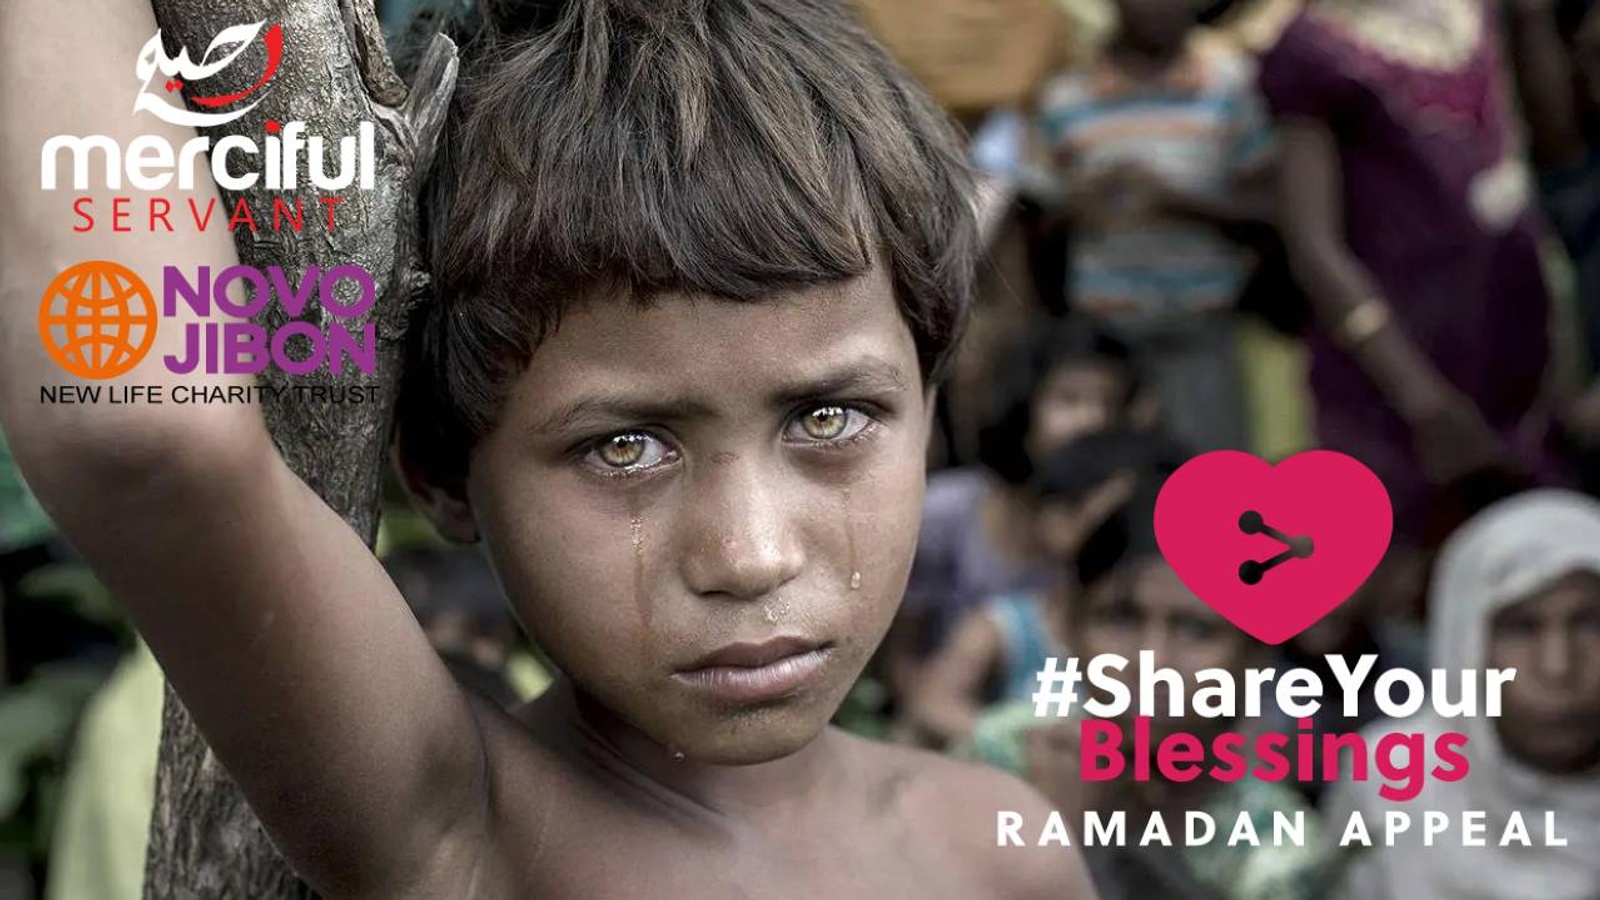 #ShareYourBlessings with Rohingya Refugees this Ramadan